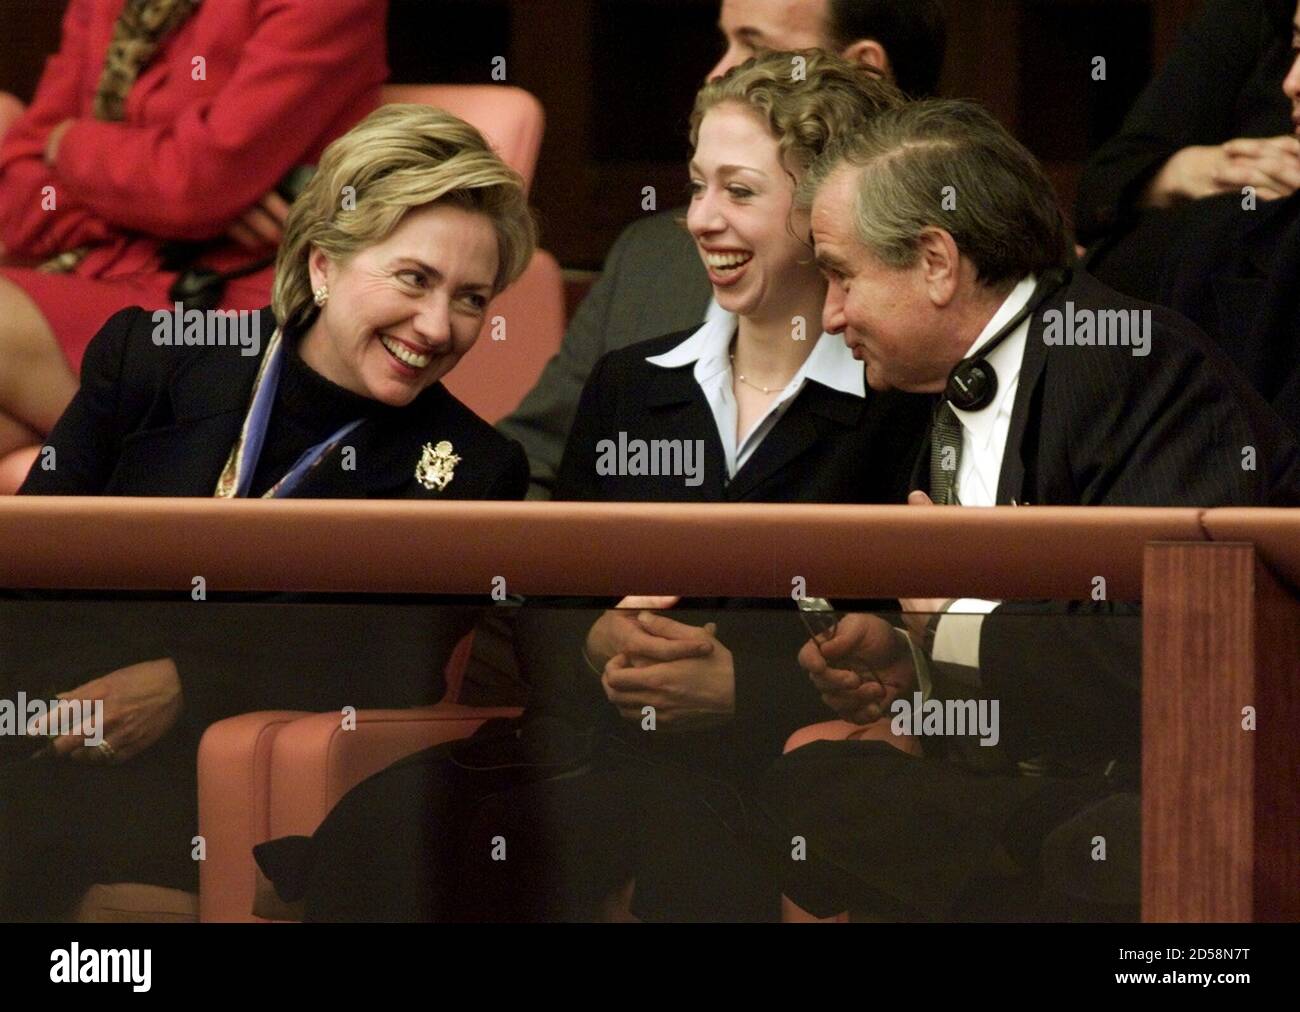 Clinton pics chelsea hot Chelsea Clinton